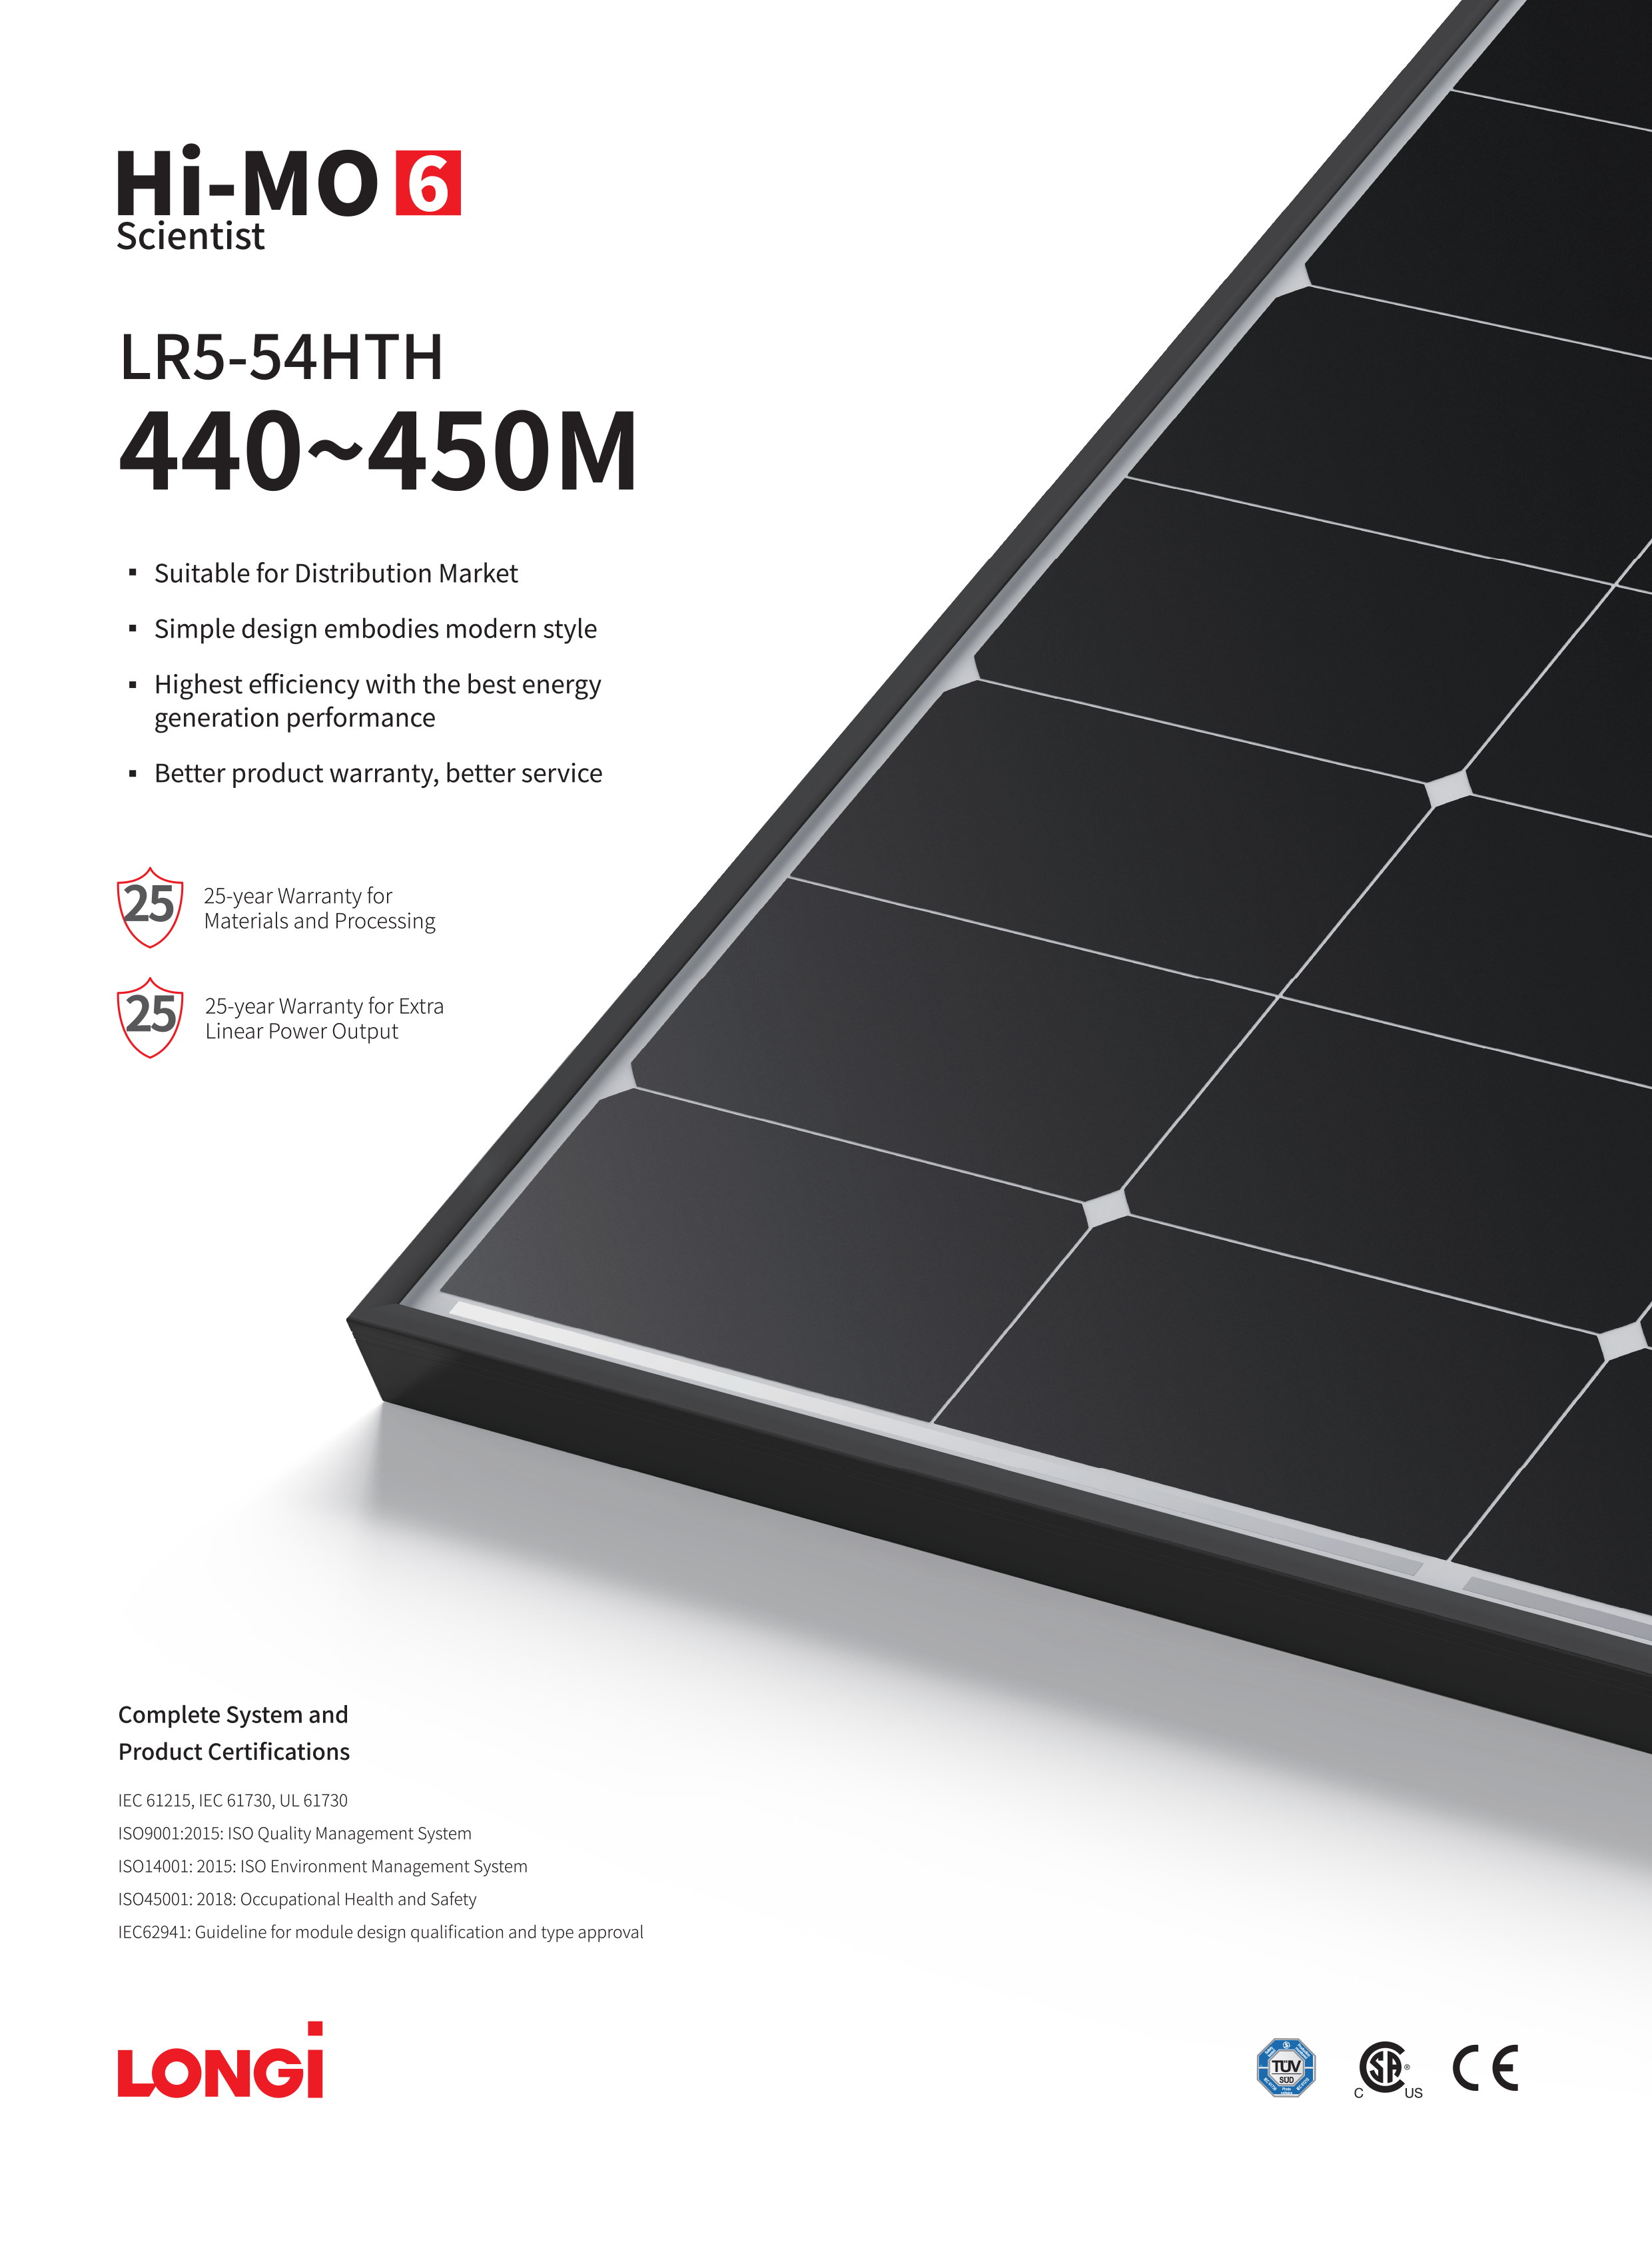 Longi Hi MO 6 440W Solarmodul LR5 54HTH 1